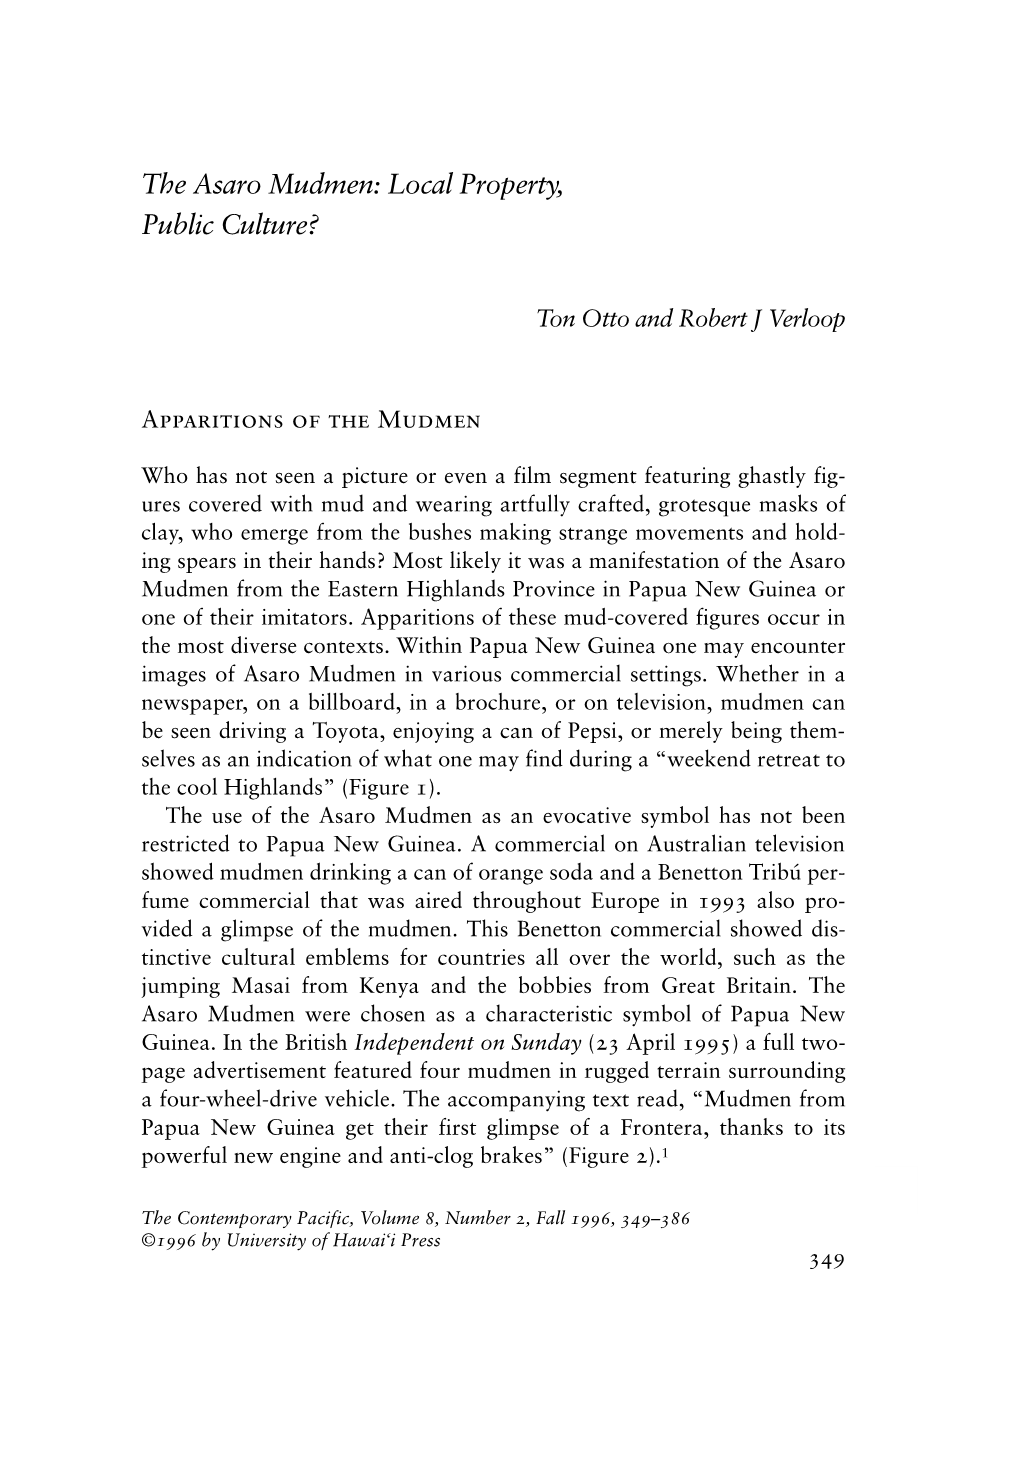 The Asaro Mudmen: Local Property, Public Culture?